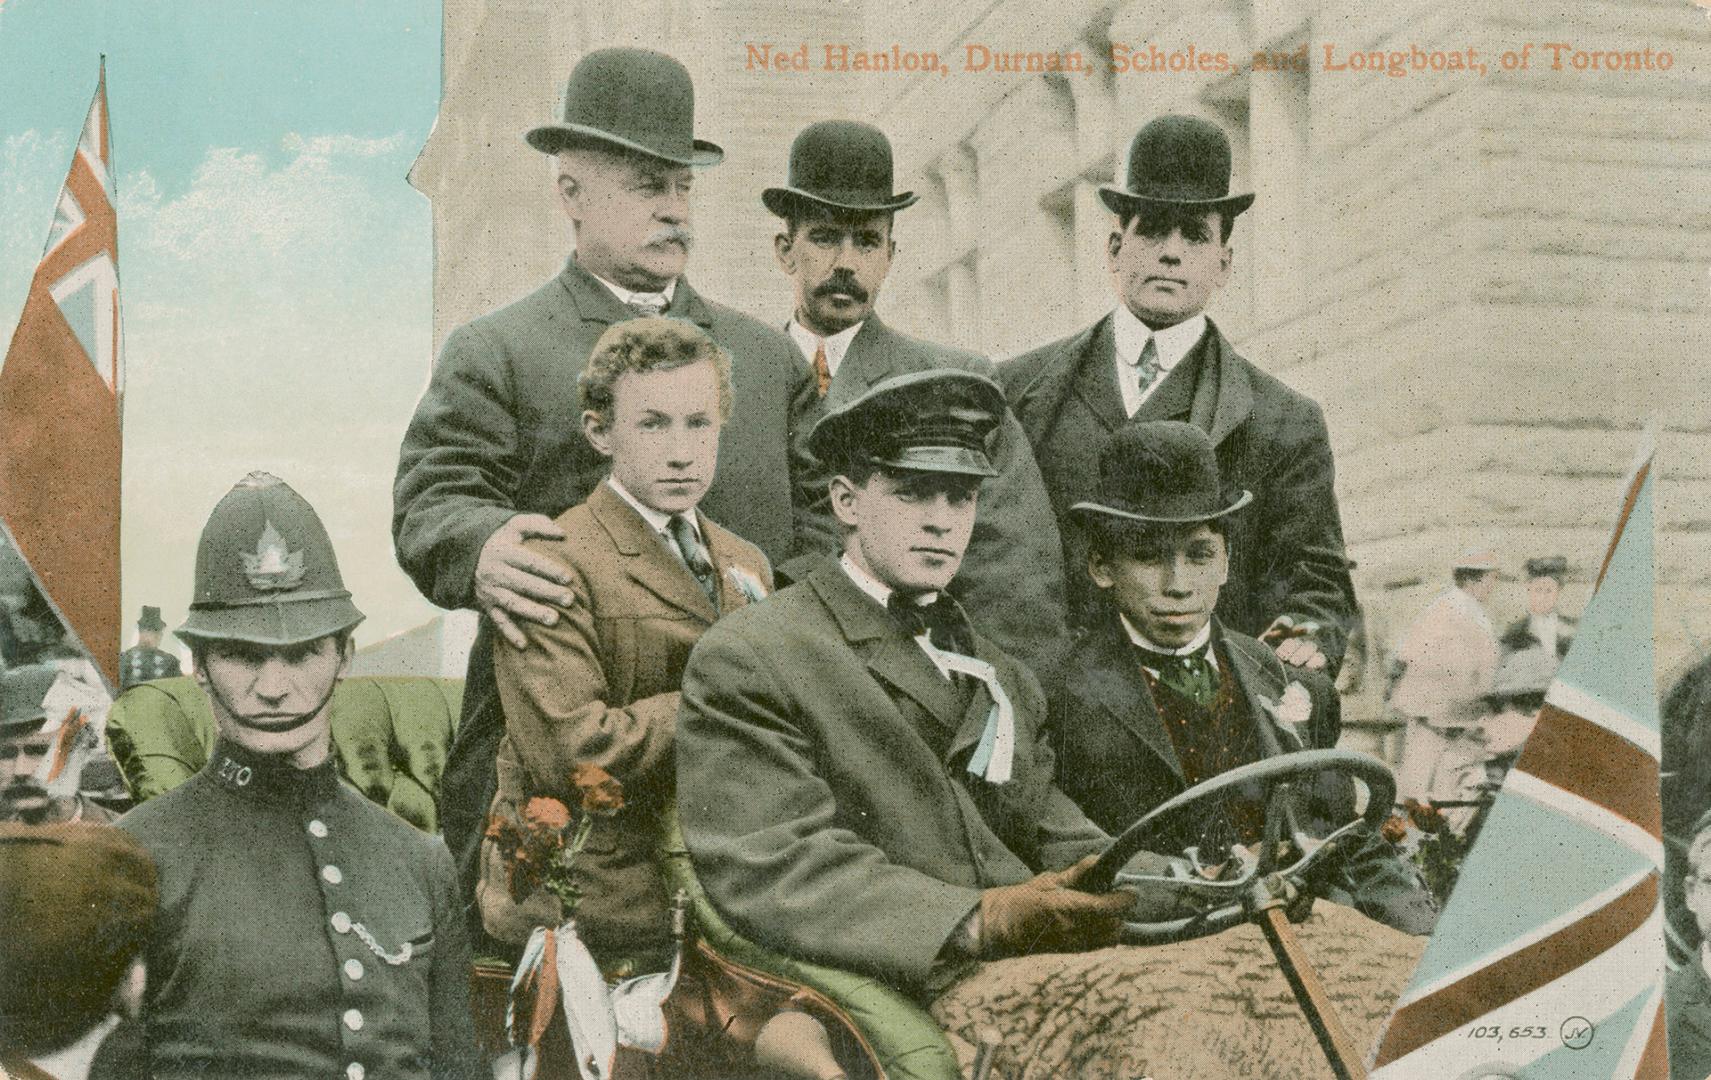 Ned Hanlon, Durnan, Scholes, and Longboat, of Toronto